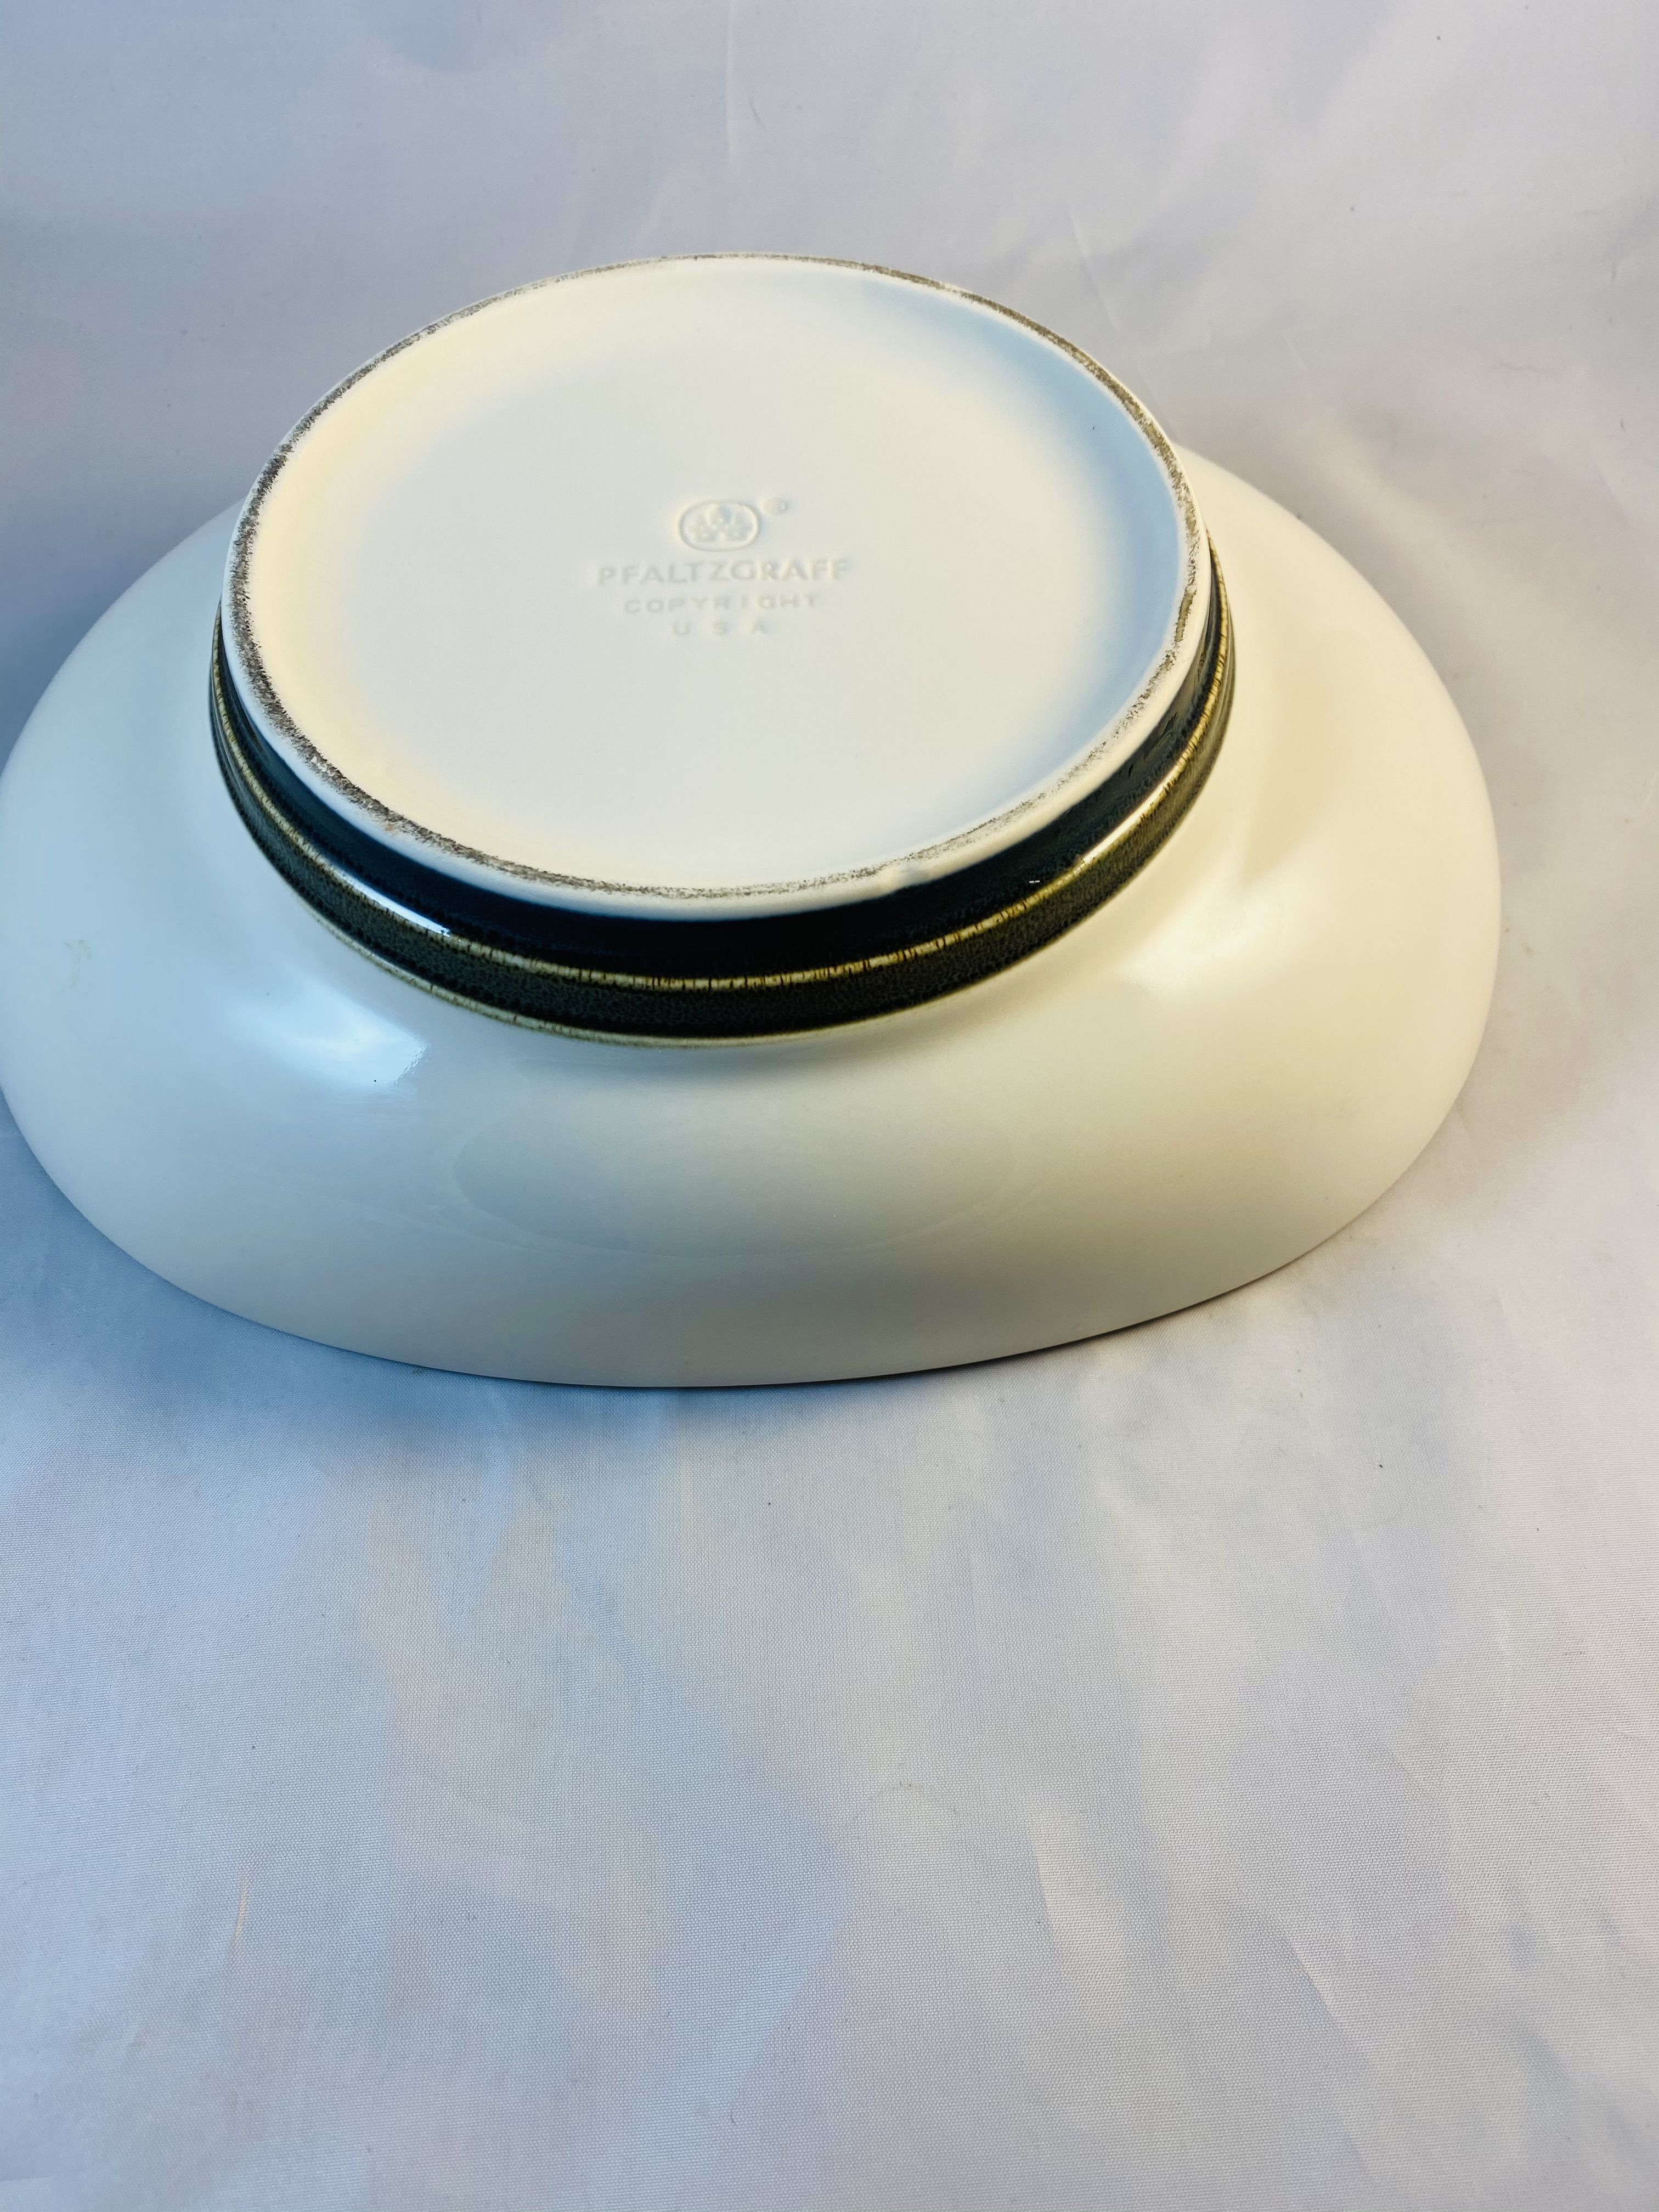 Pfaltzgraff Cream Oval Serving Bowl Serving Dish. frnt cab